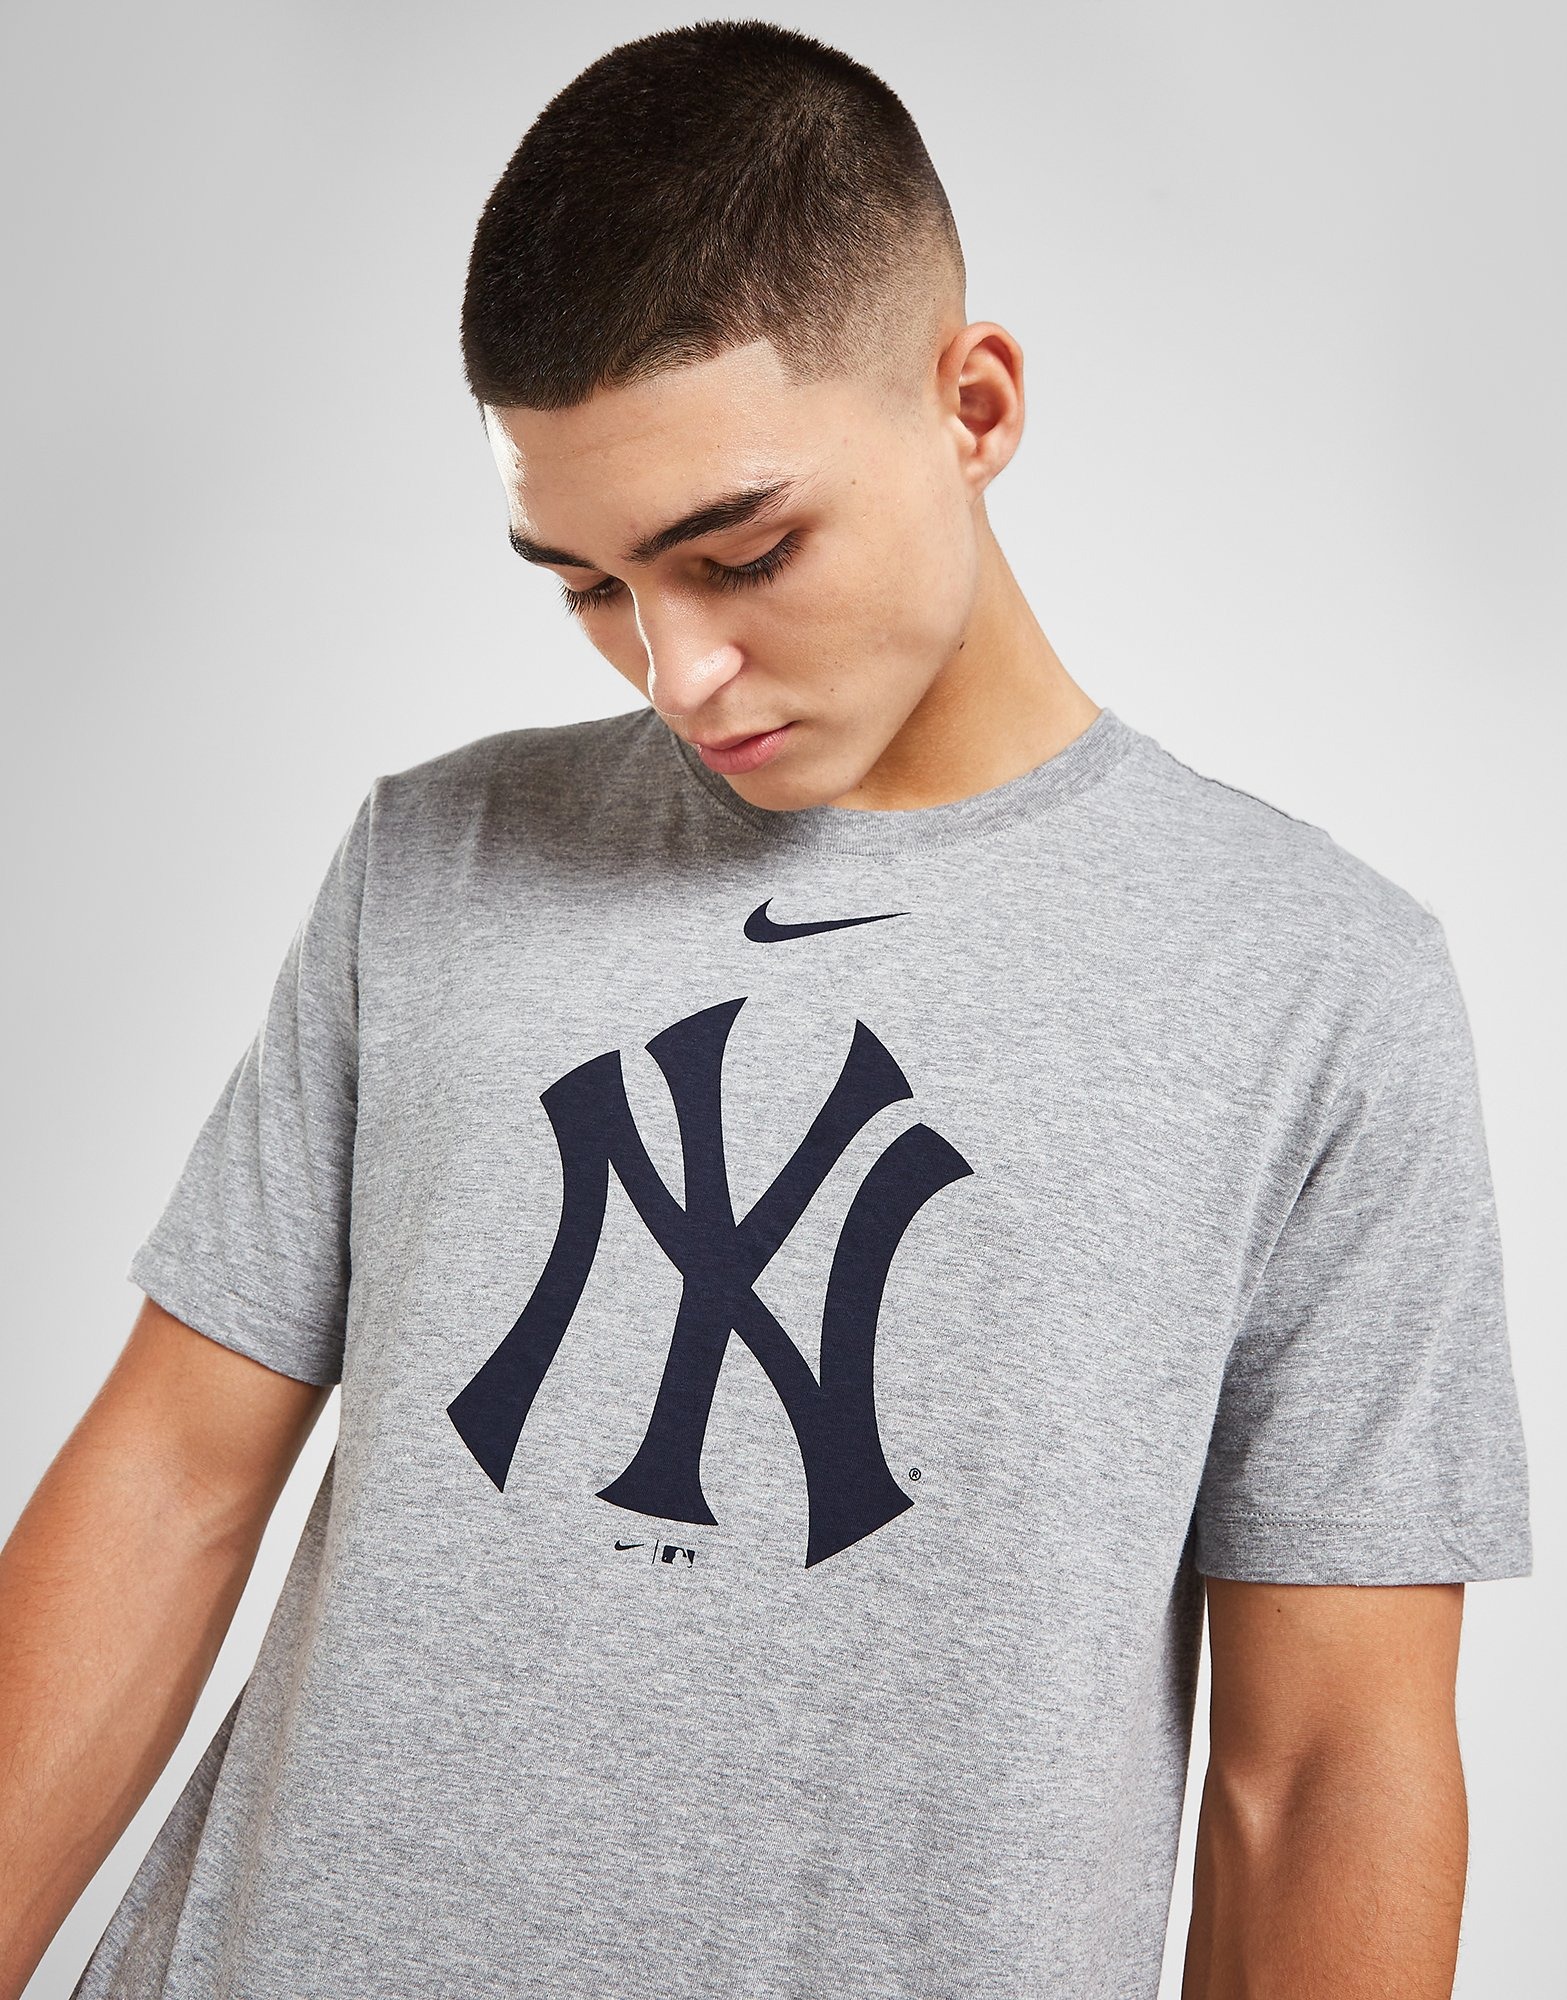 Grey MLB New York Yankees sports jumper, sweater mens branded